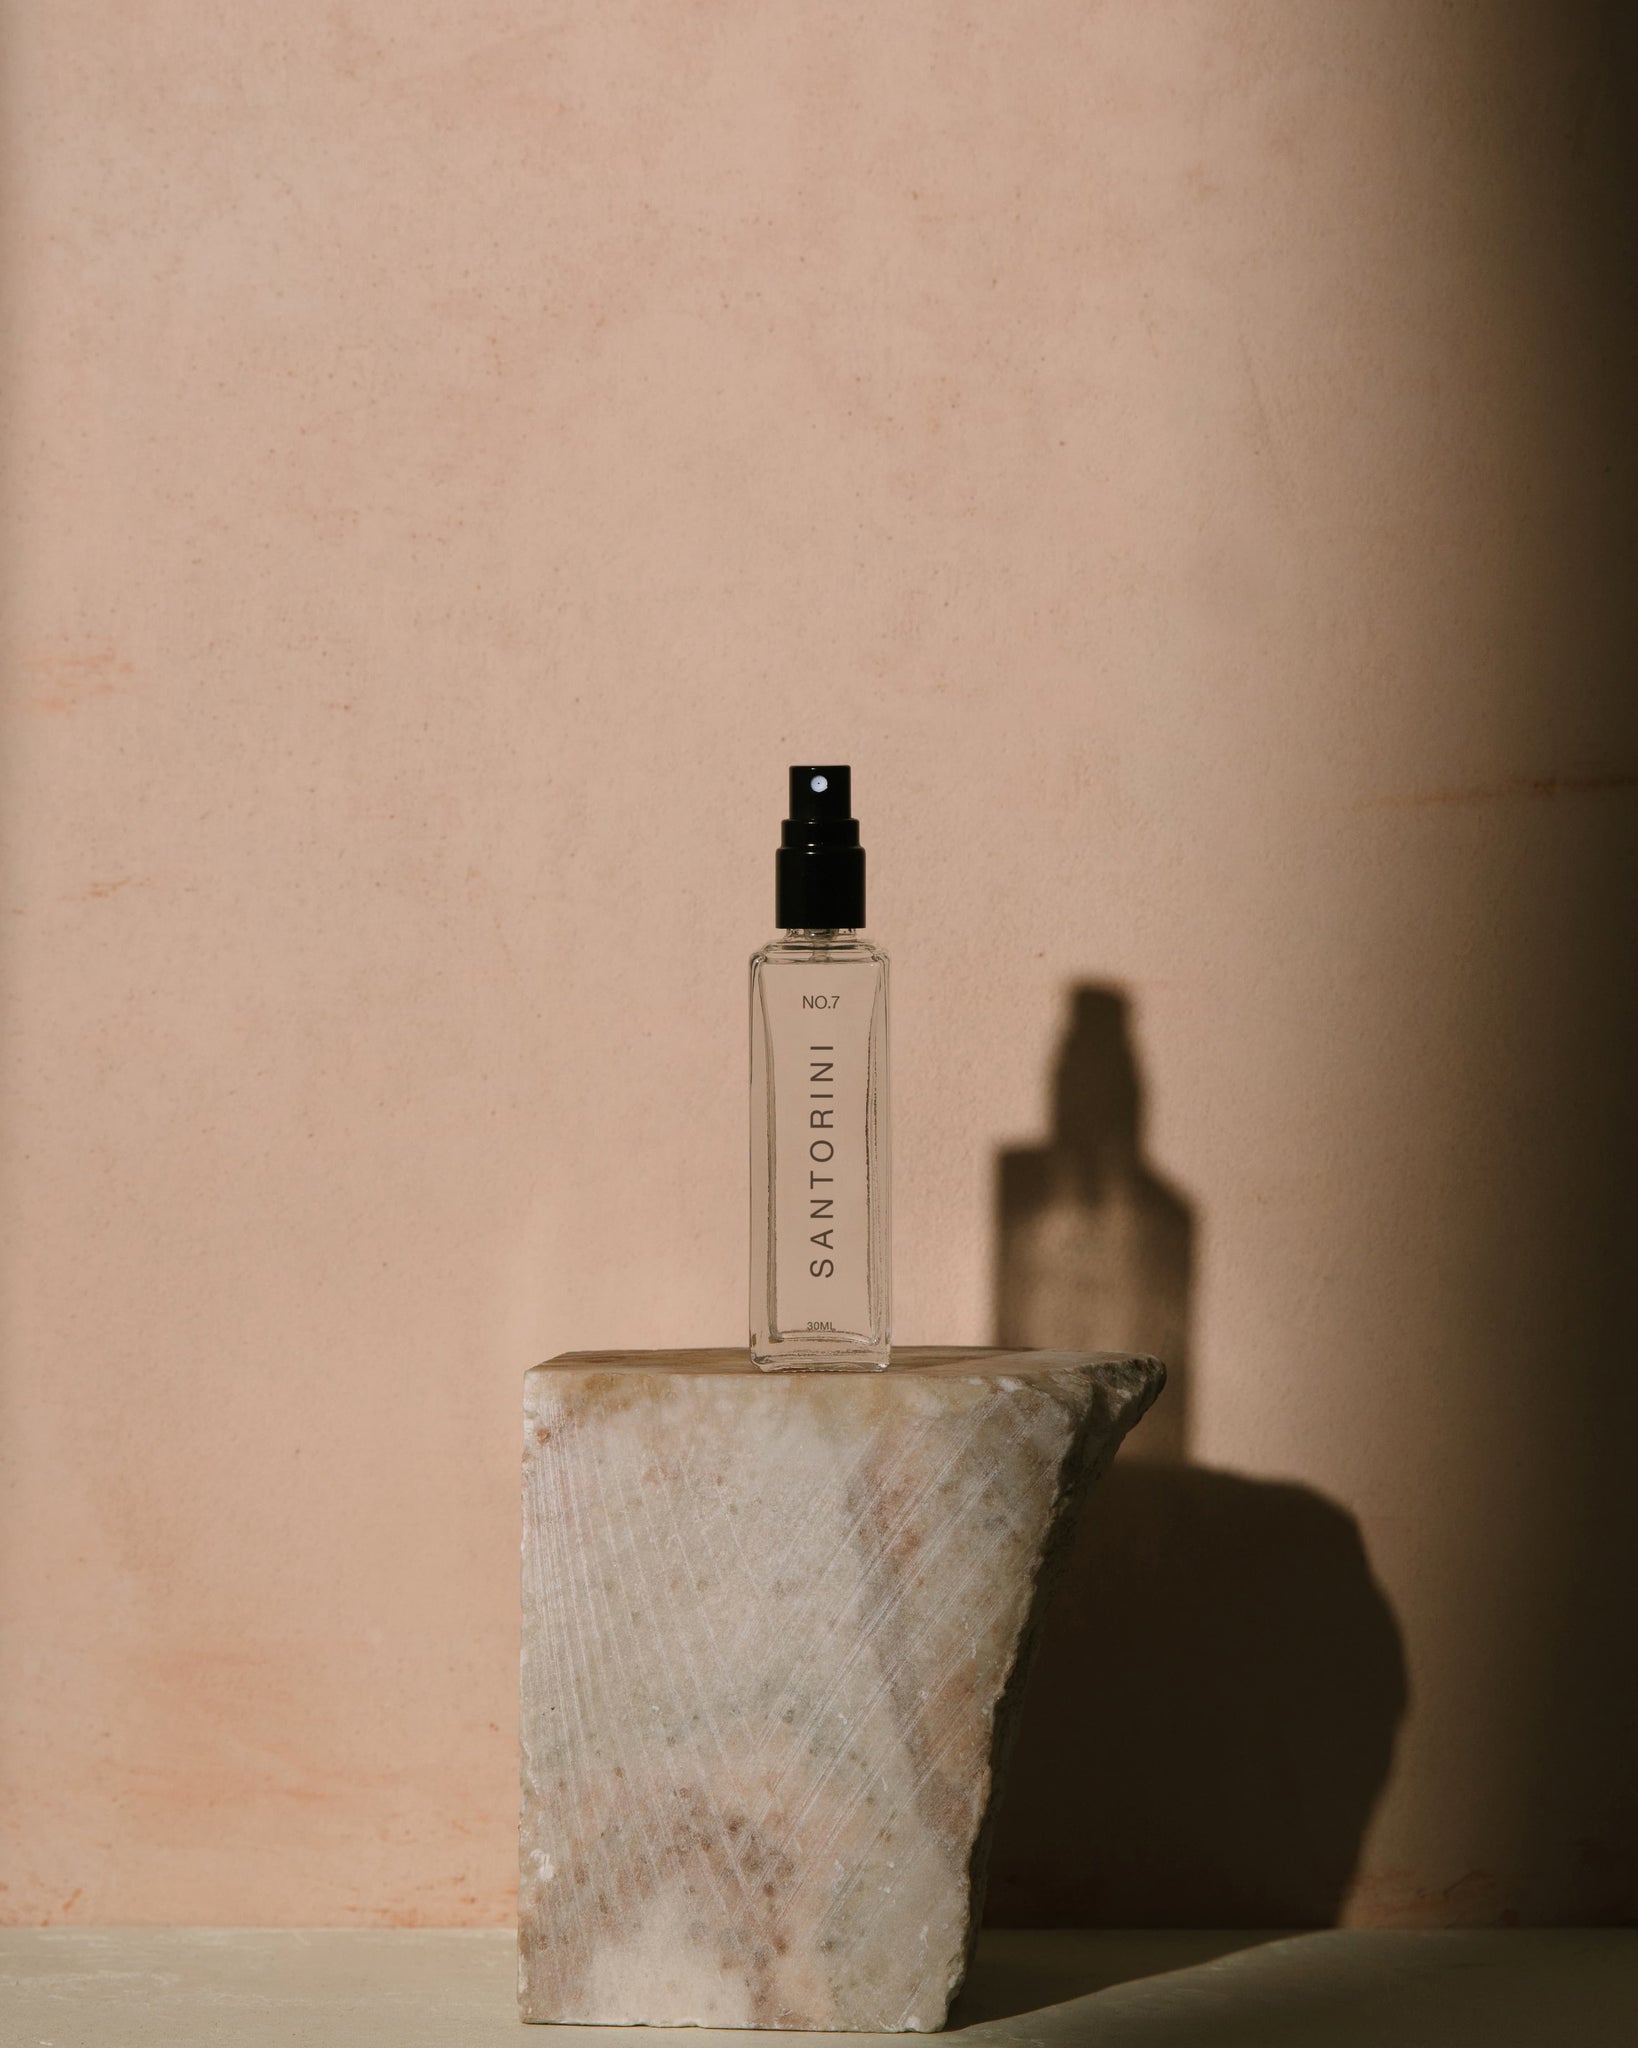 Square Perfume Bottle Mockup No. 1 - Copal Studio Packaging Mockups For Designers